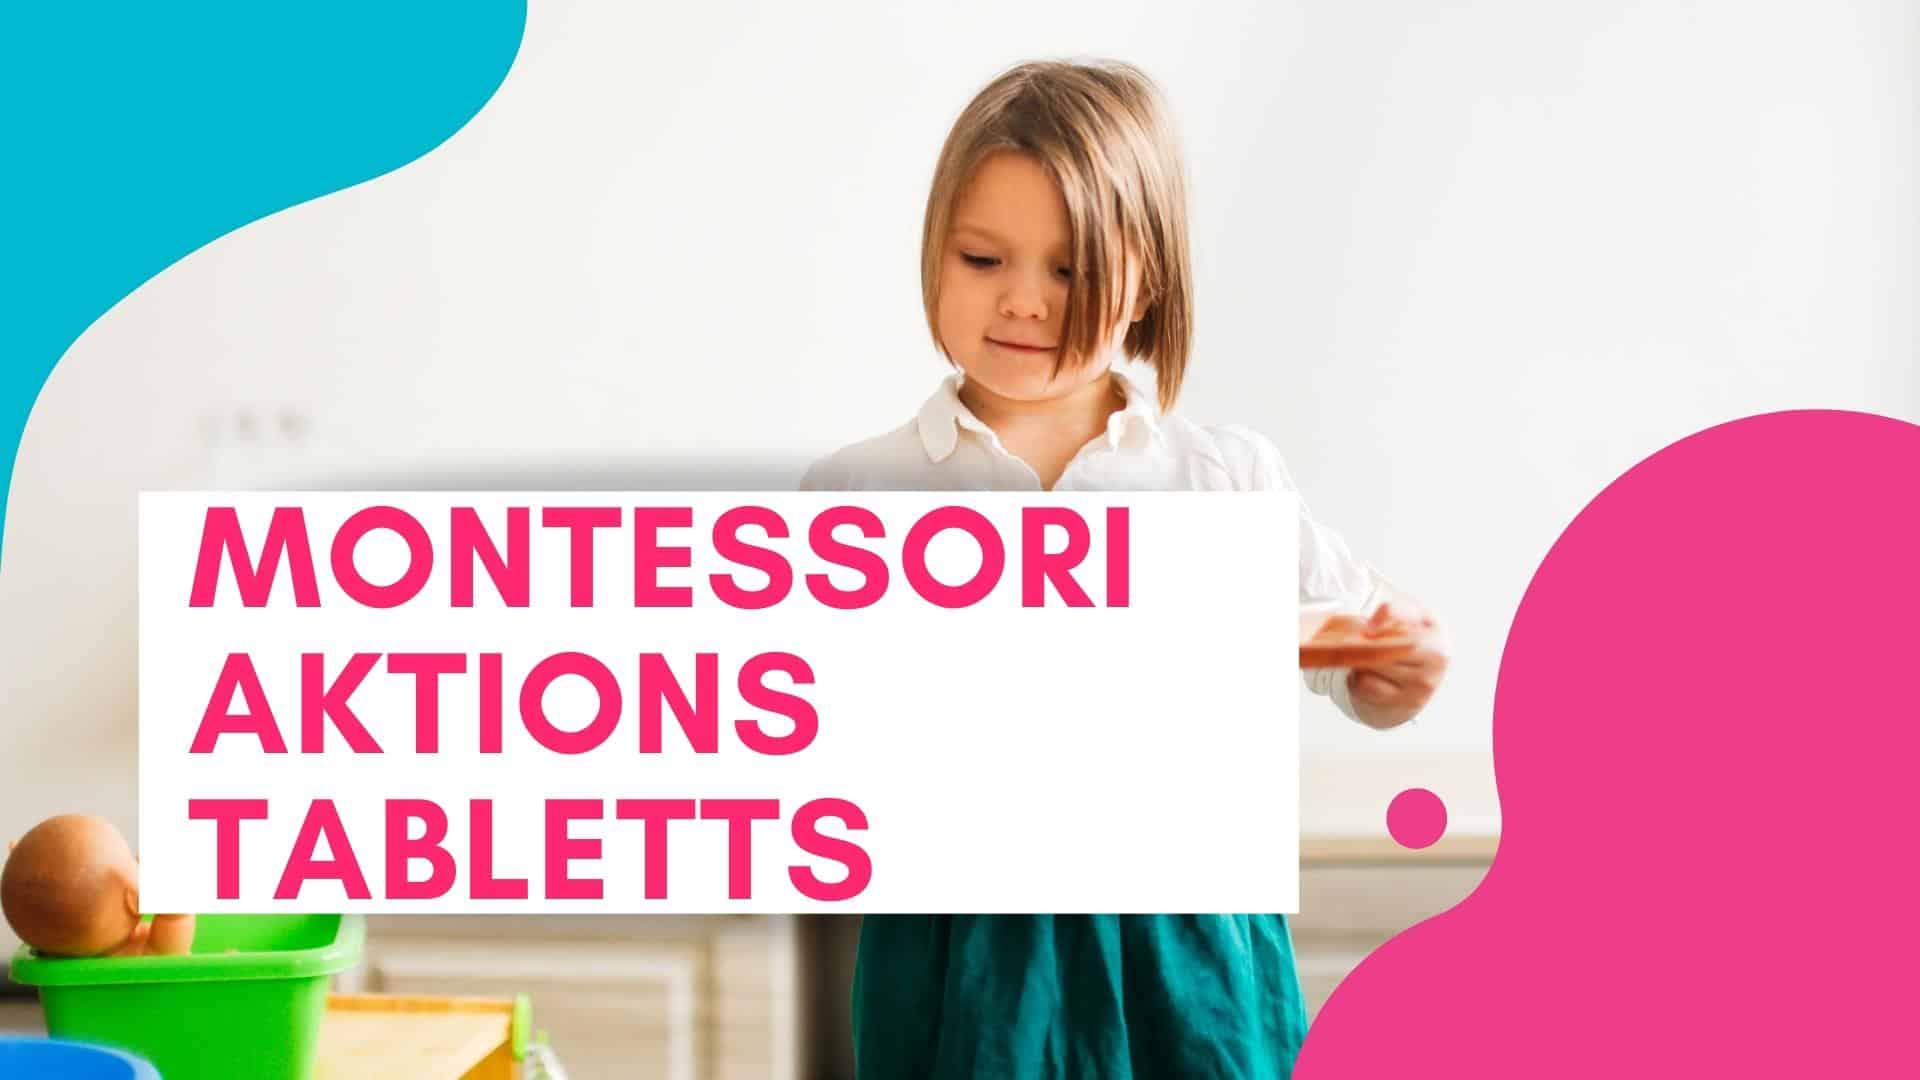 Montessori Aktionstabletts